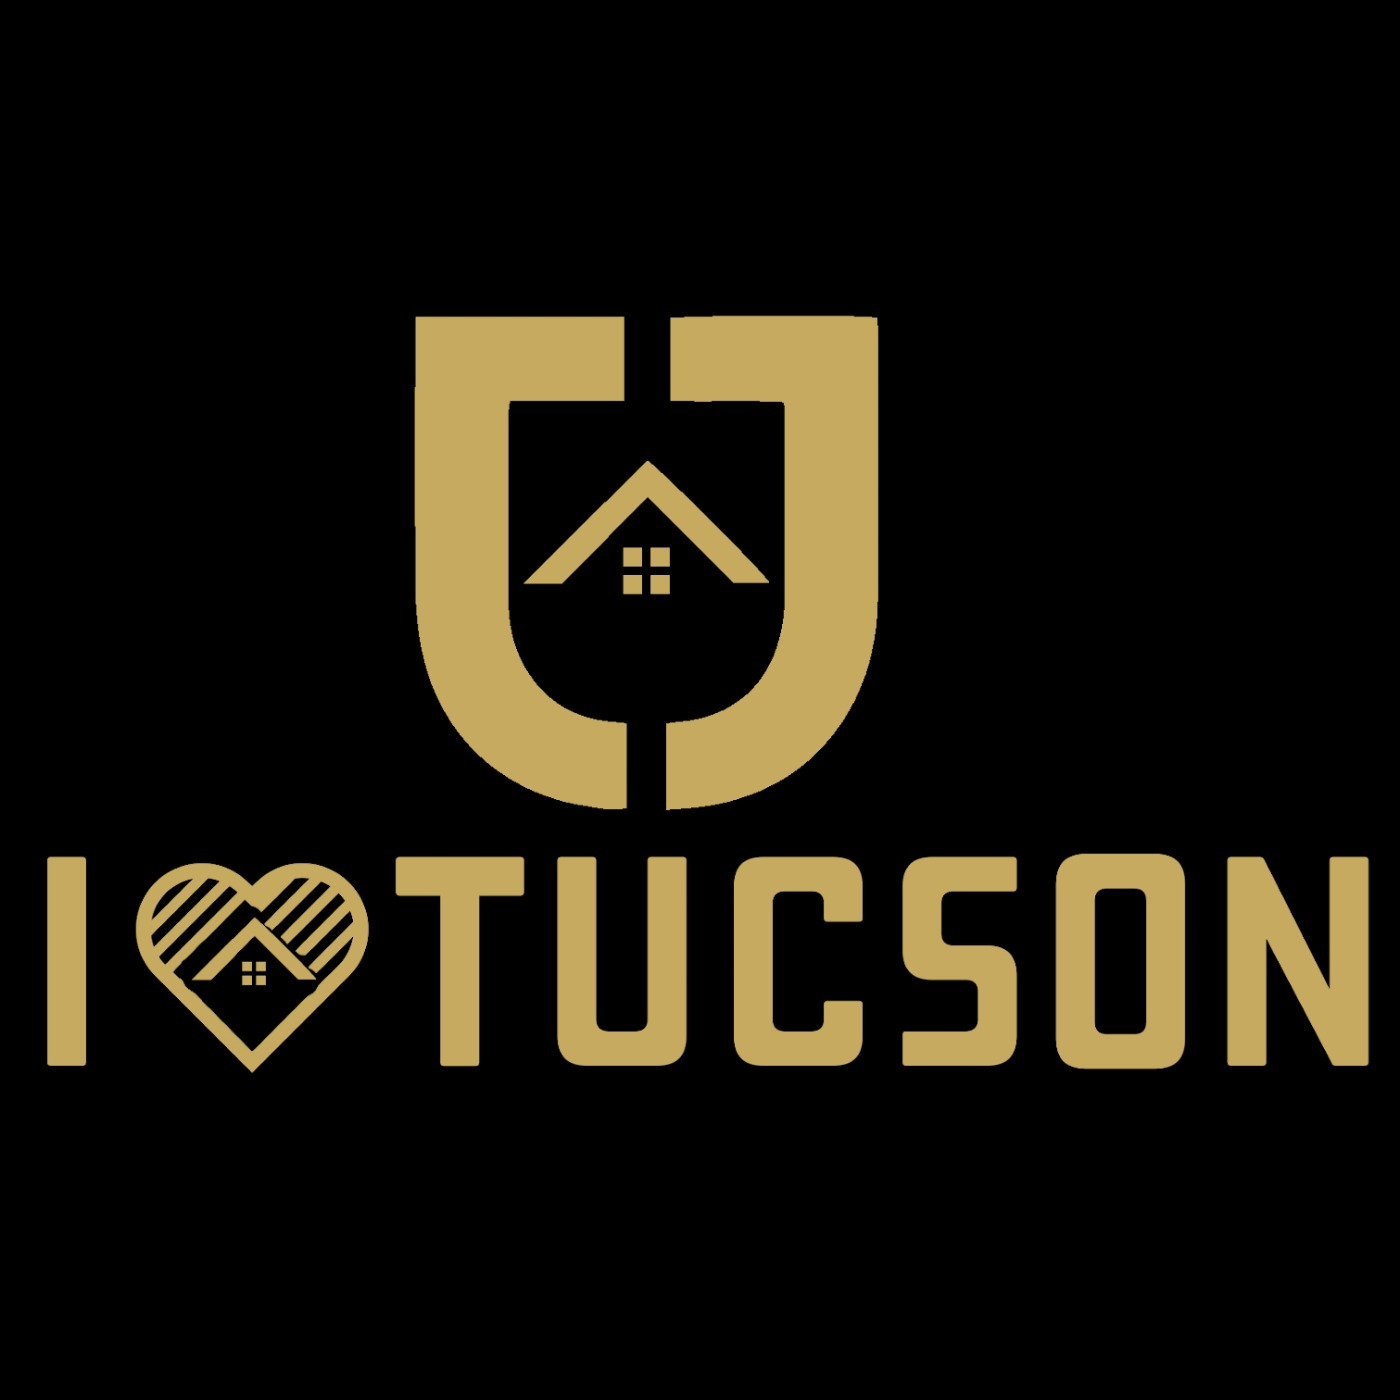 I Heart Tucson